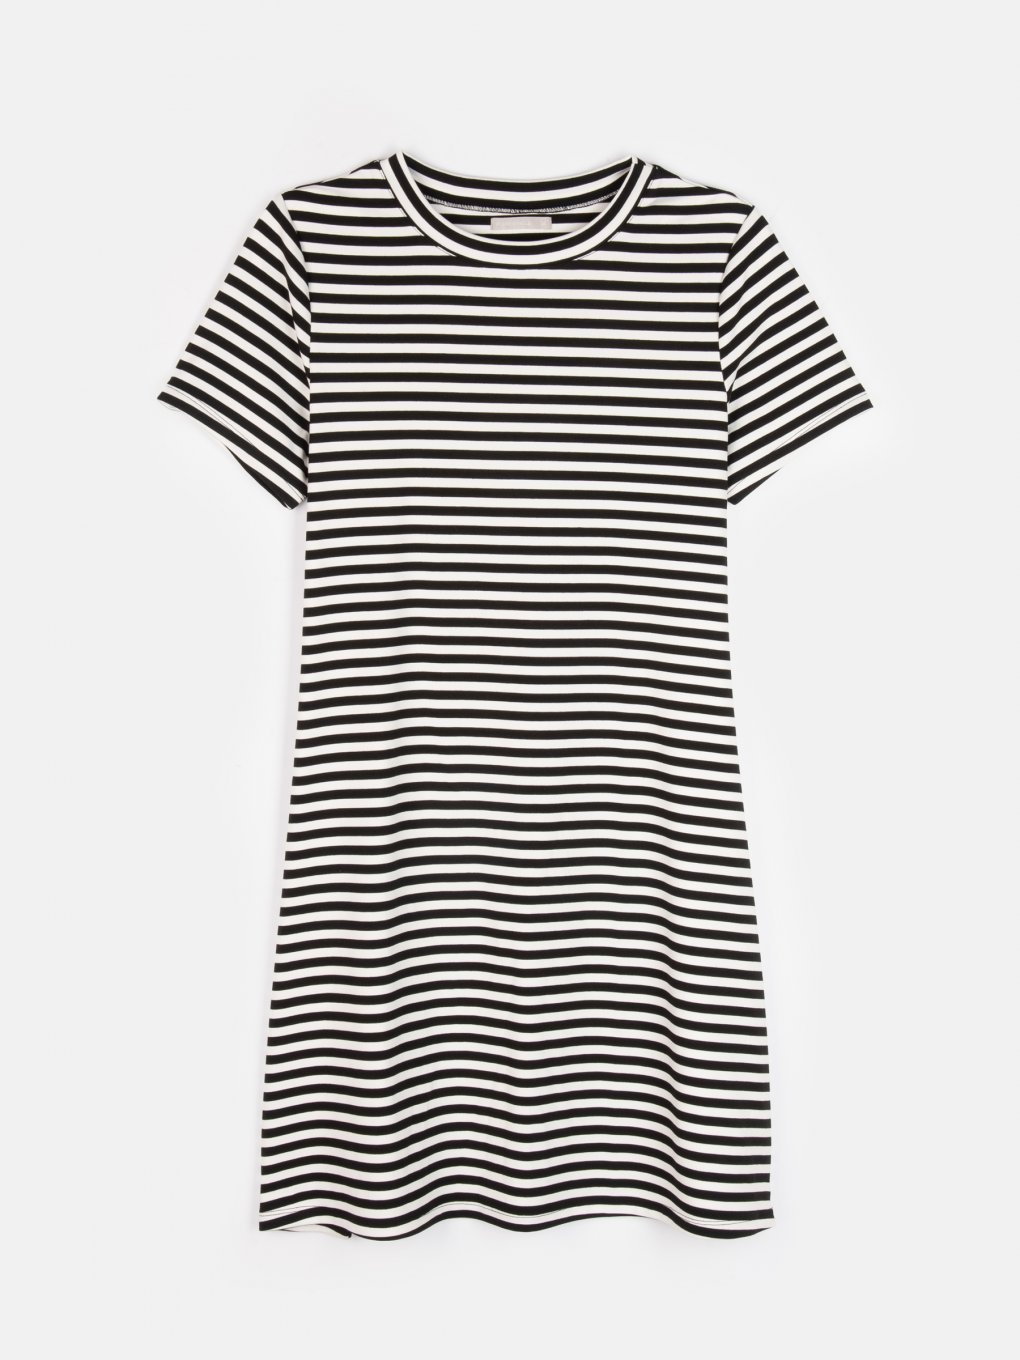 Striped t-shirt dress